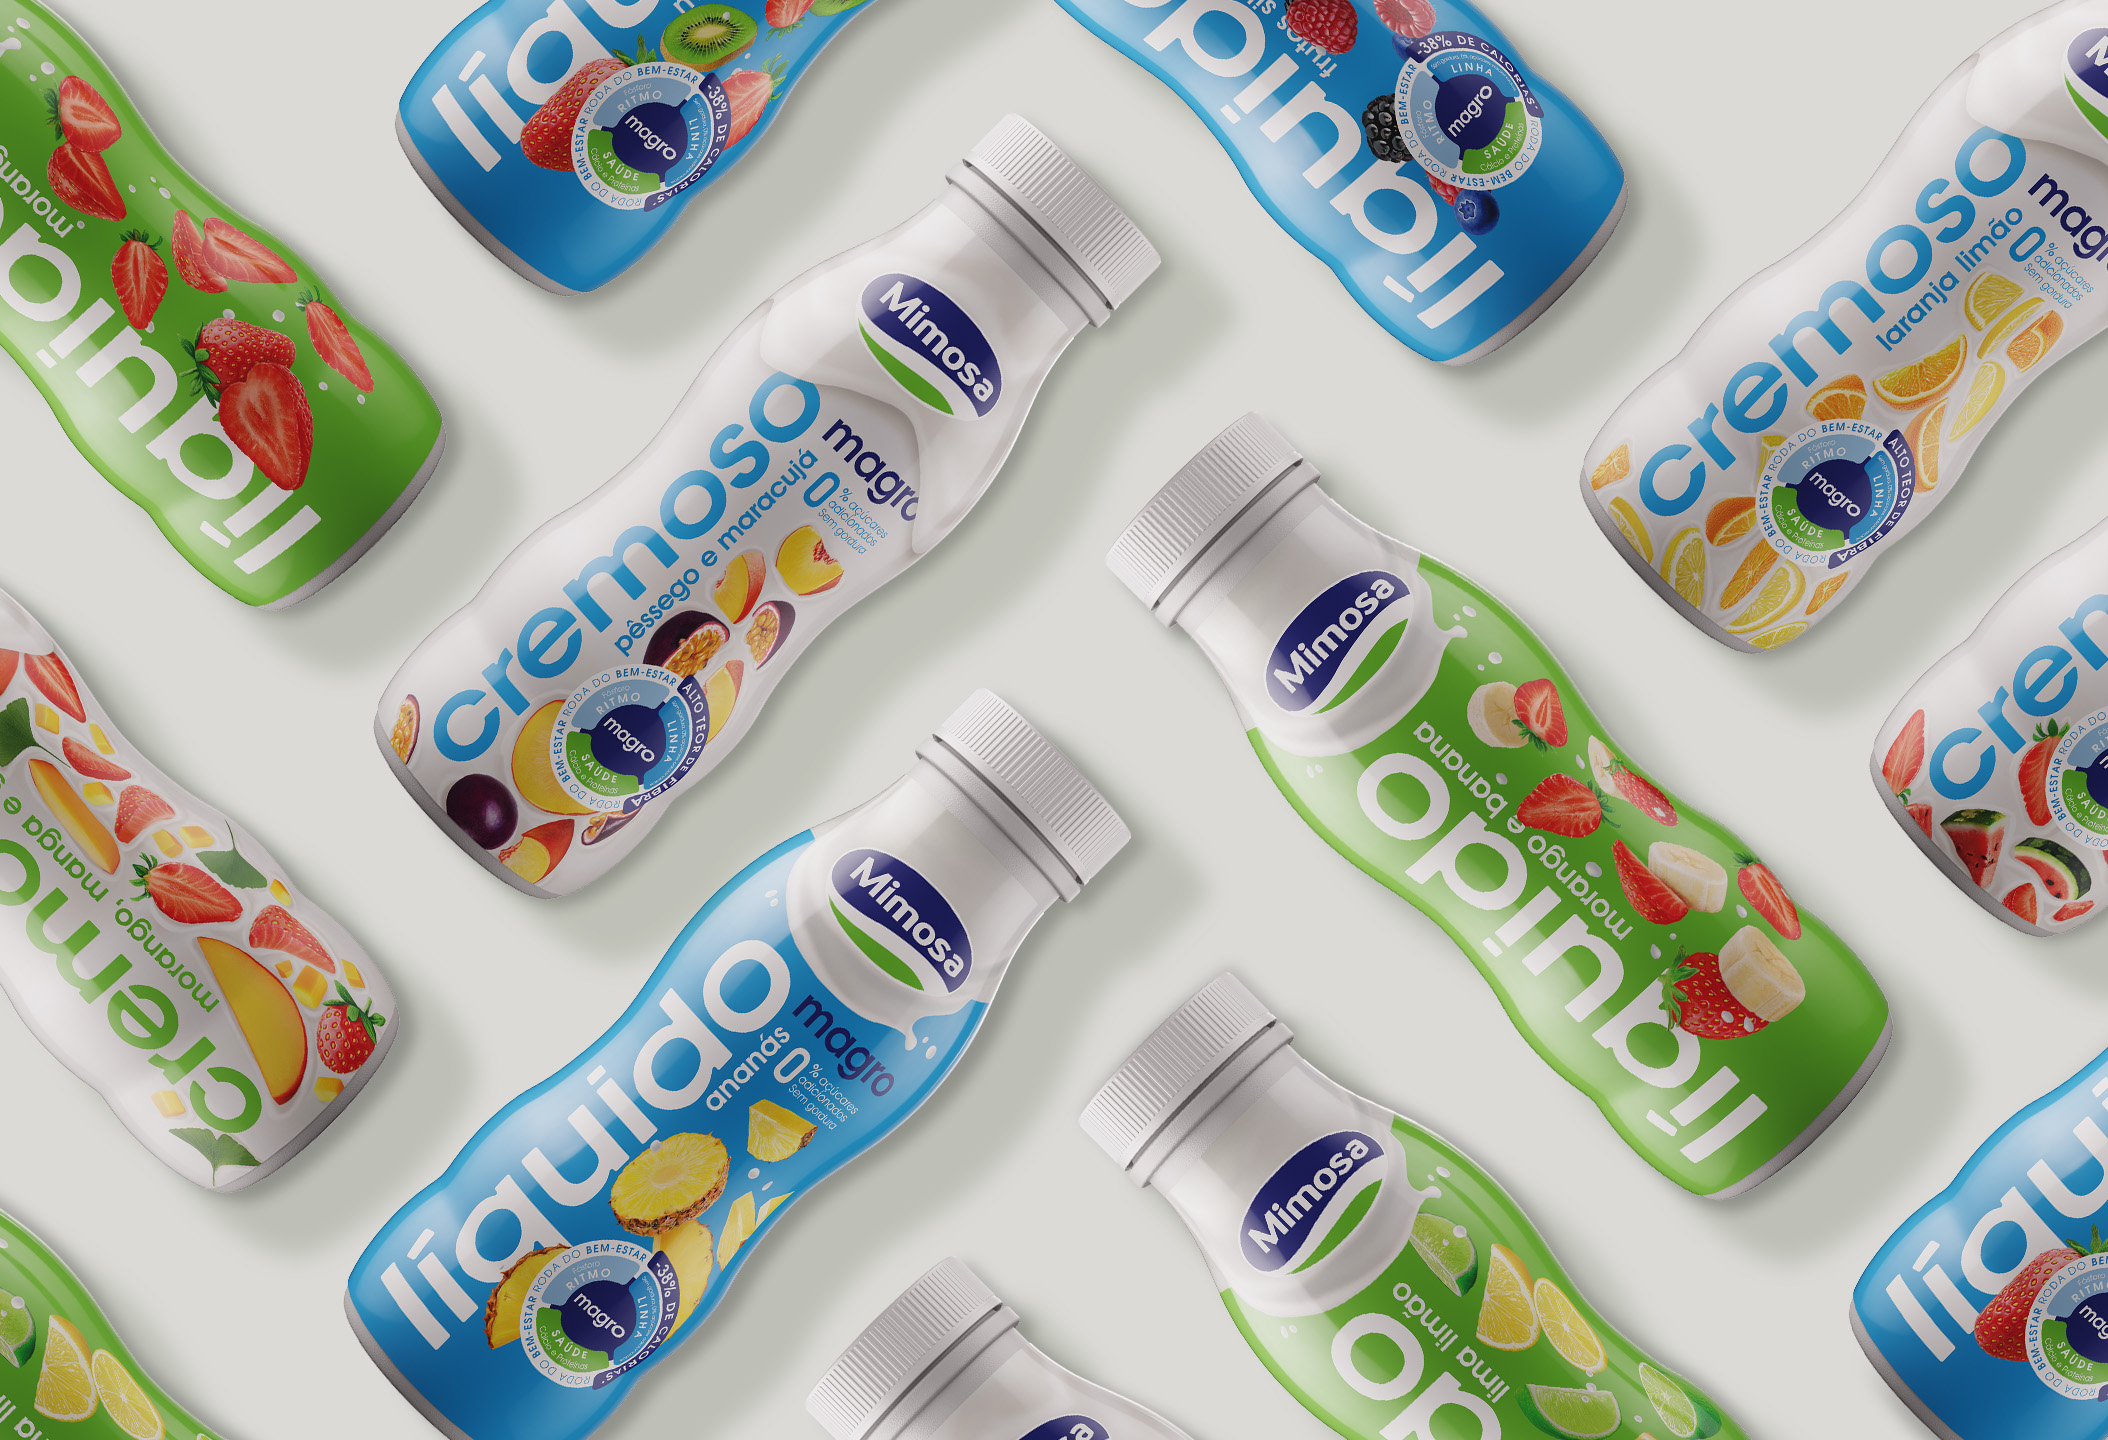 Mimosa Yoghurts Packaging Design